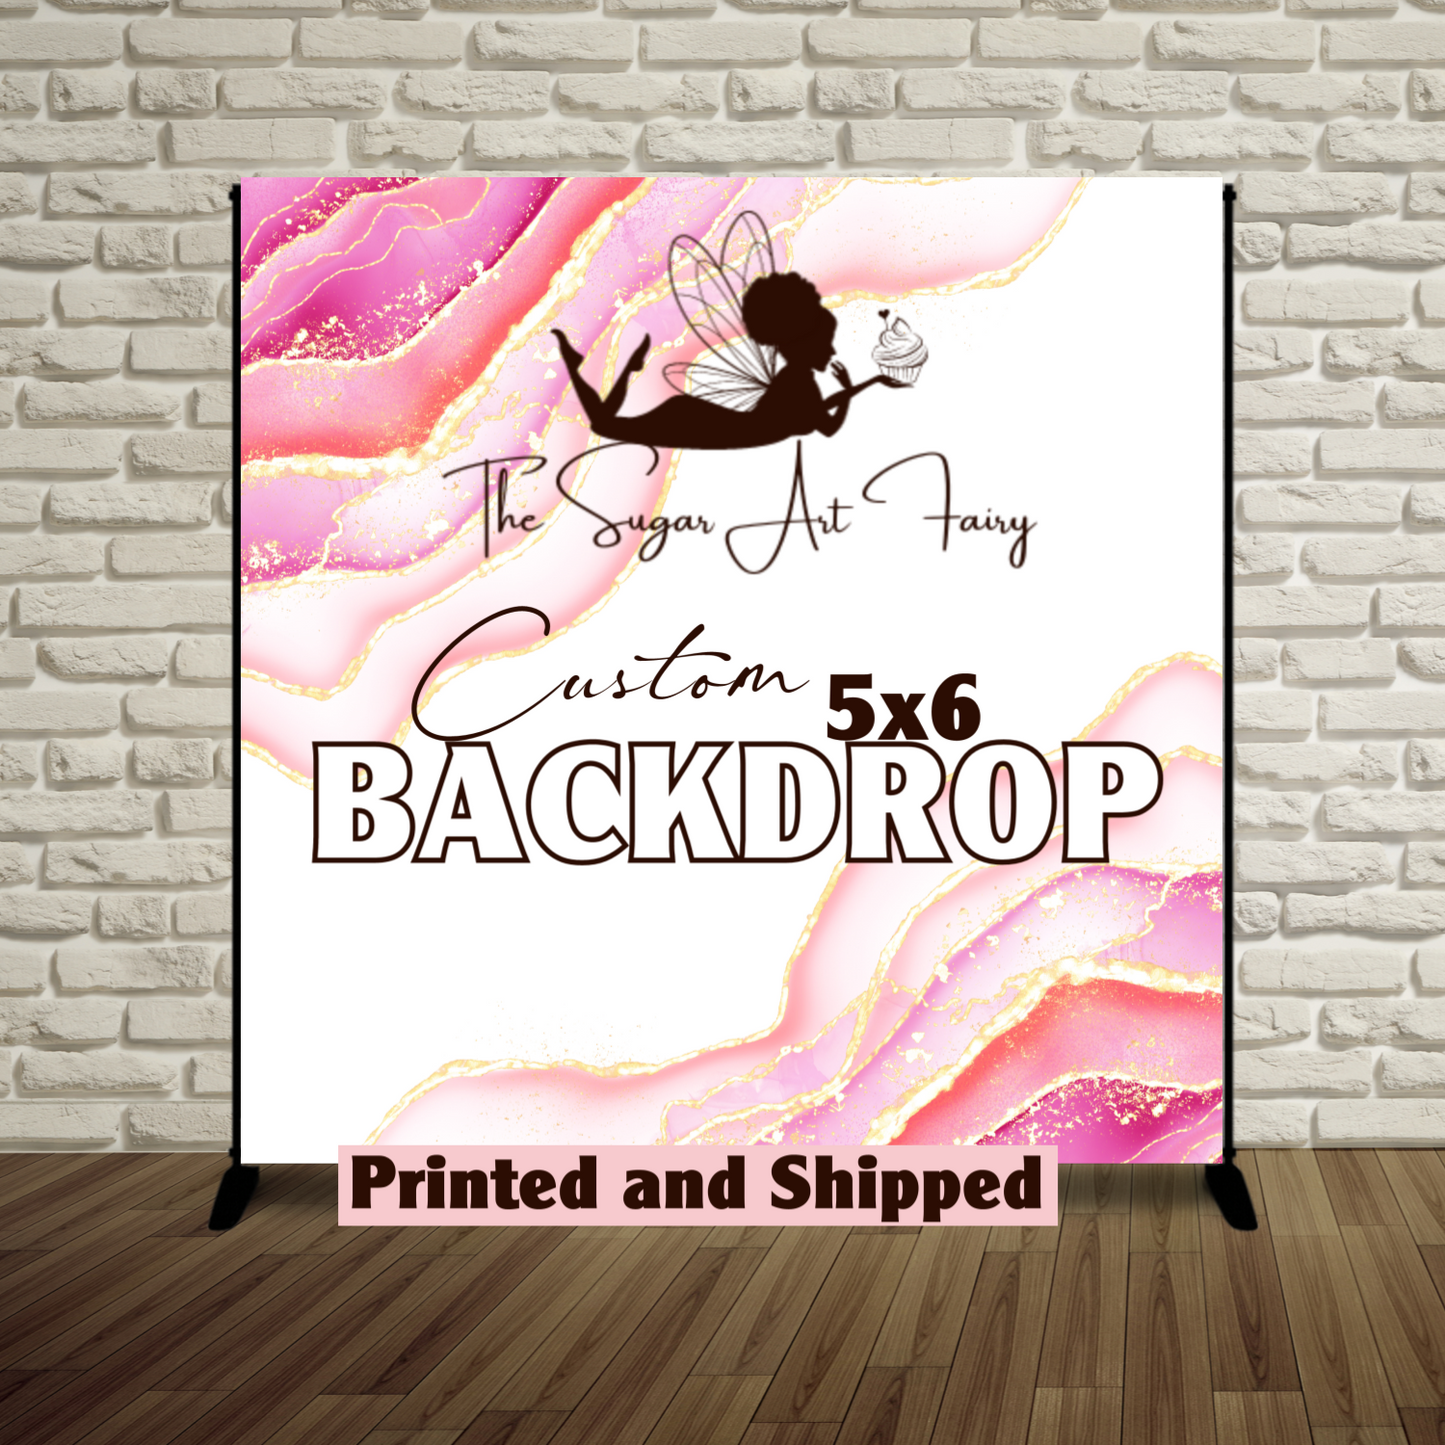 Custom 5x6 Backdrop (Design & Printed)